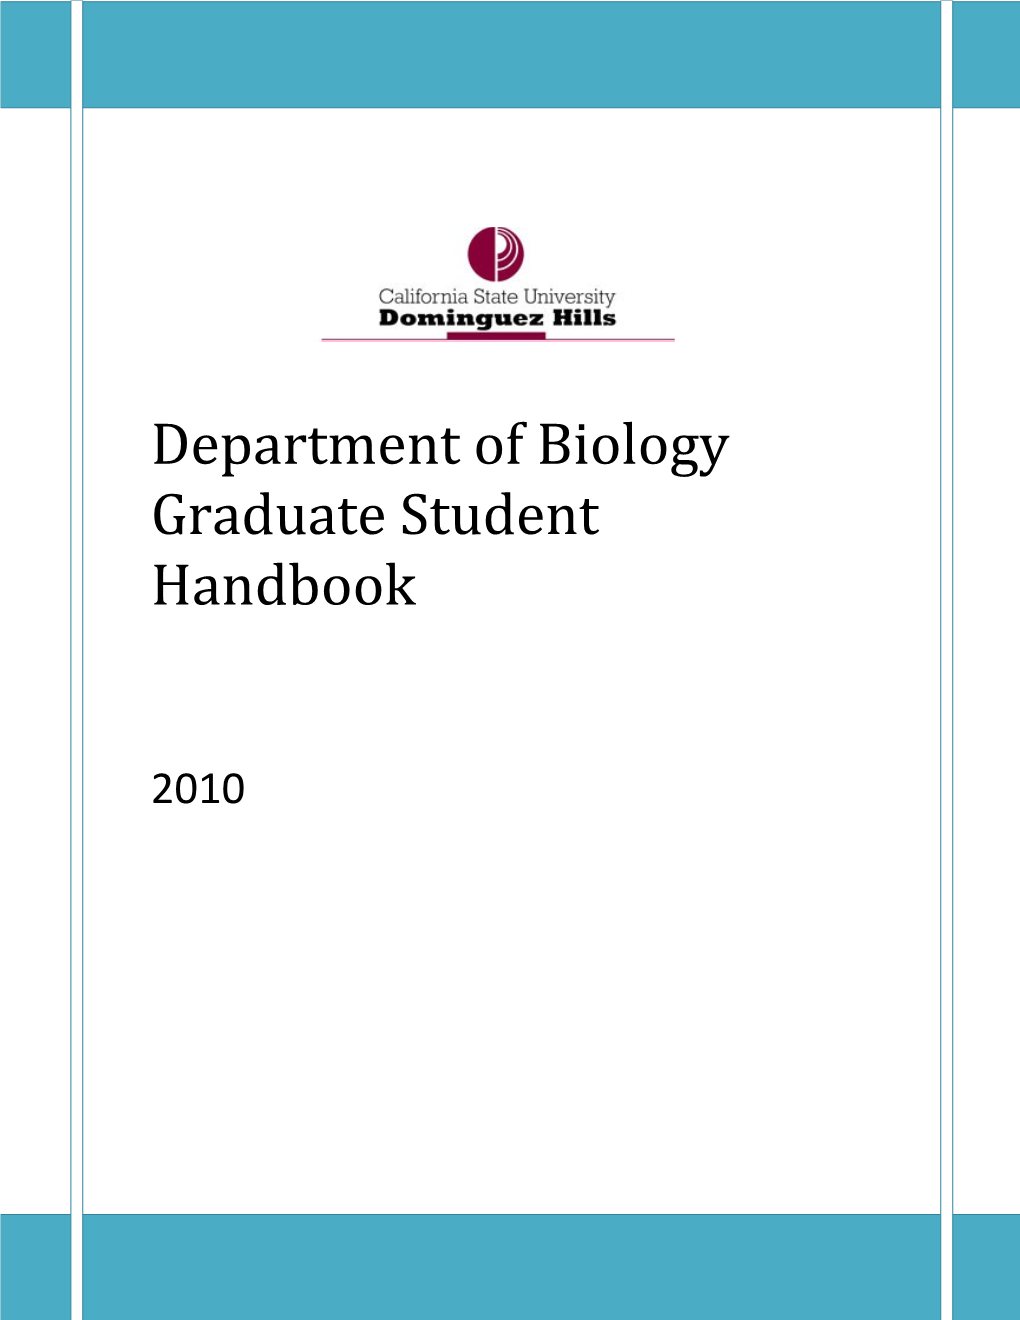 Department of Biology Graduate Student Handbook